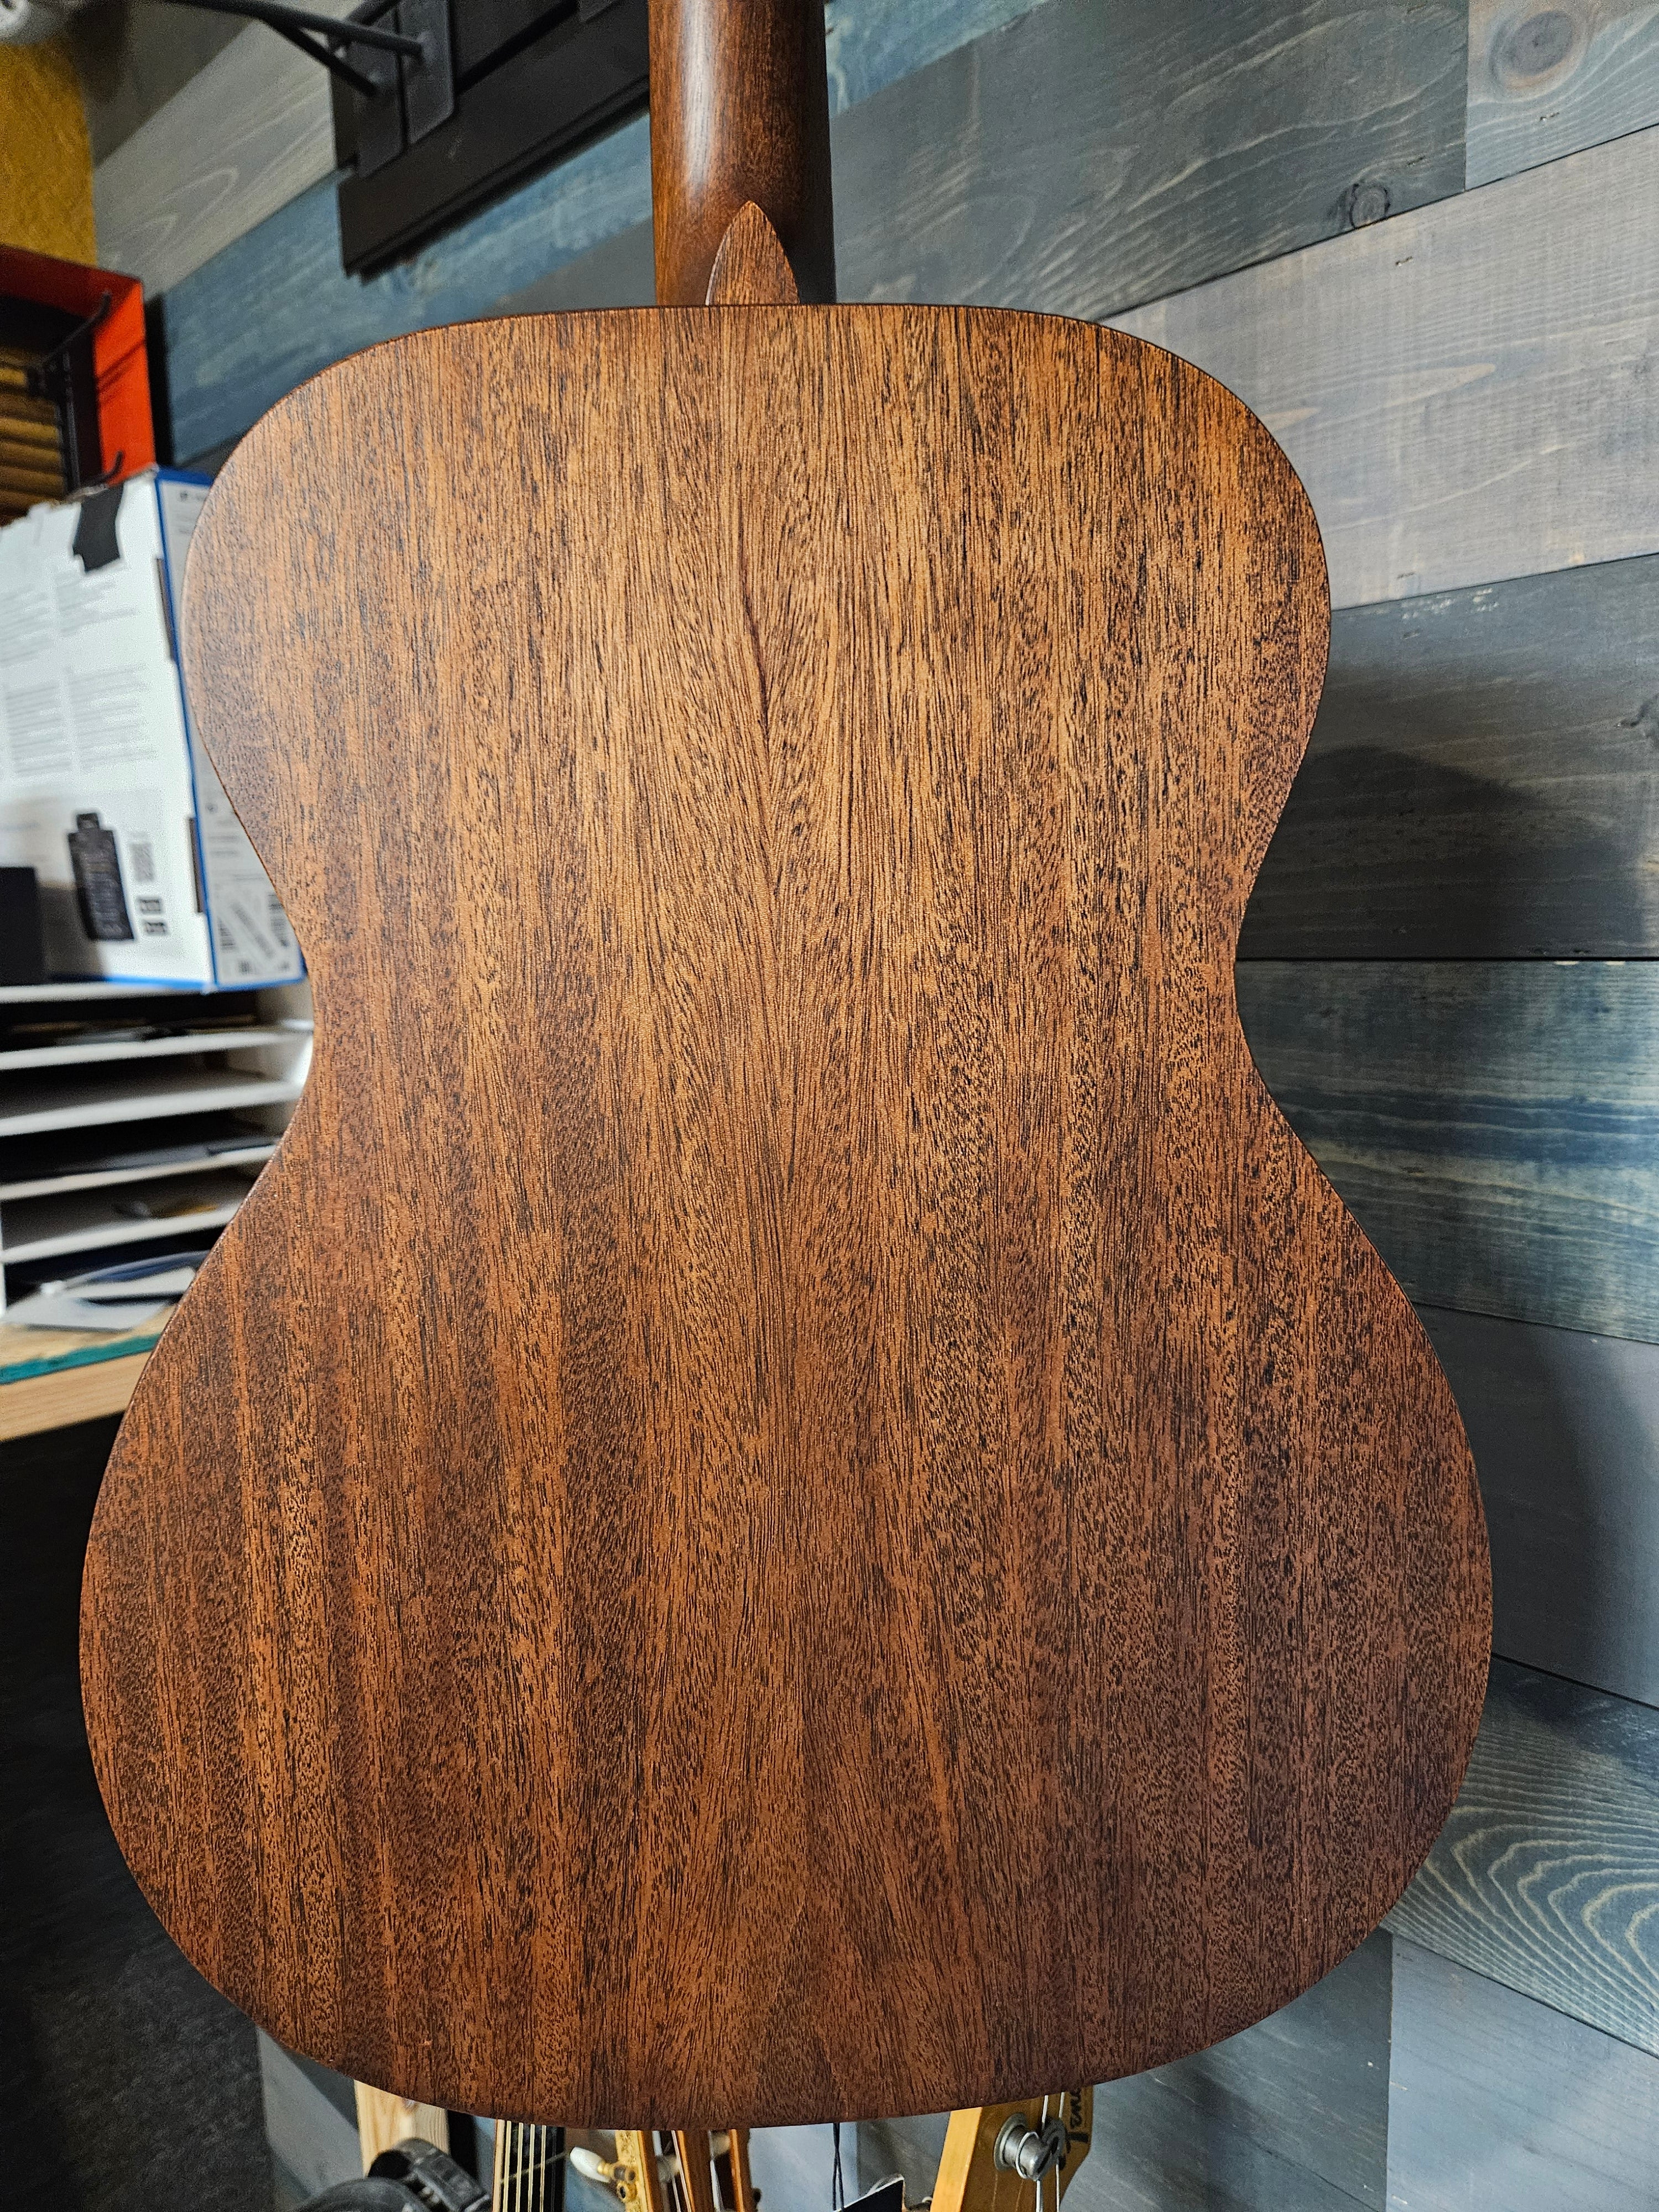 USED Martin 000-15M Acoustic Guitar - Mahogany